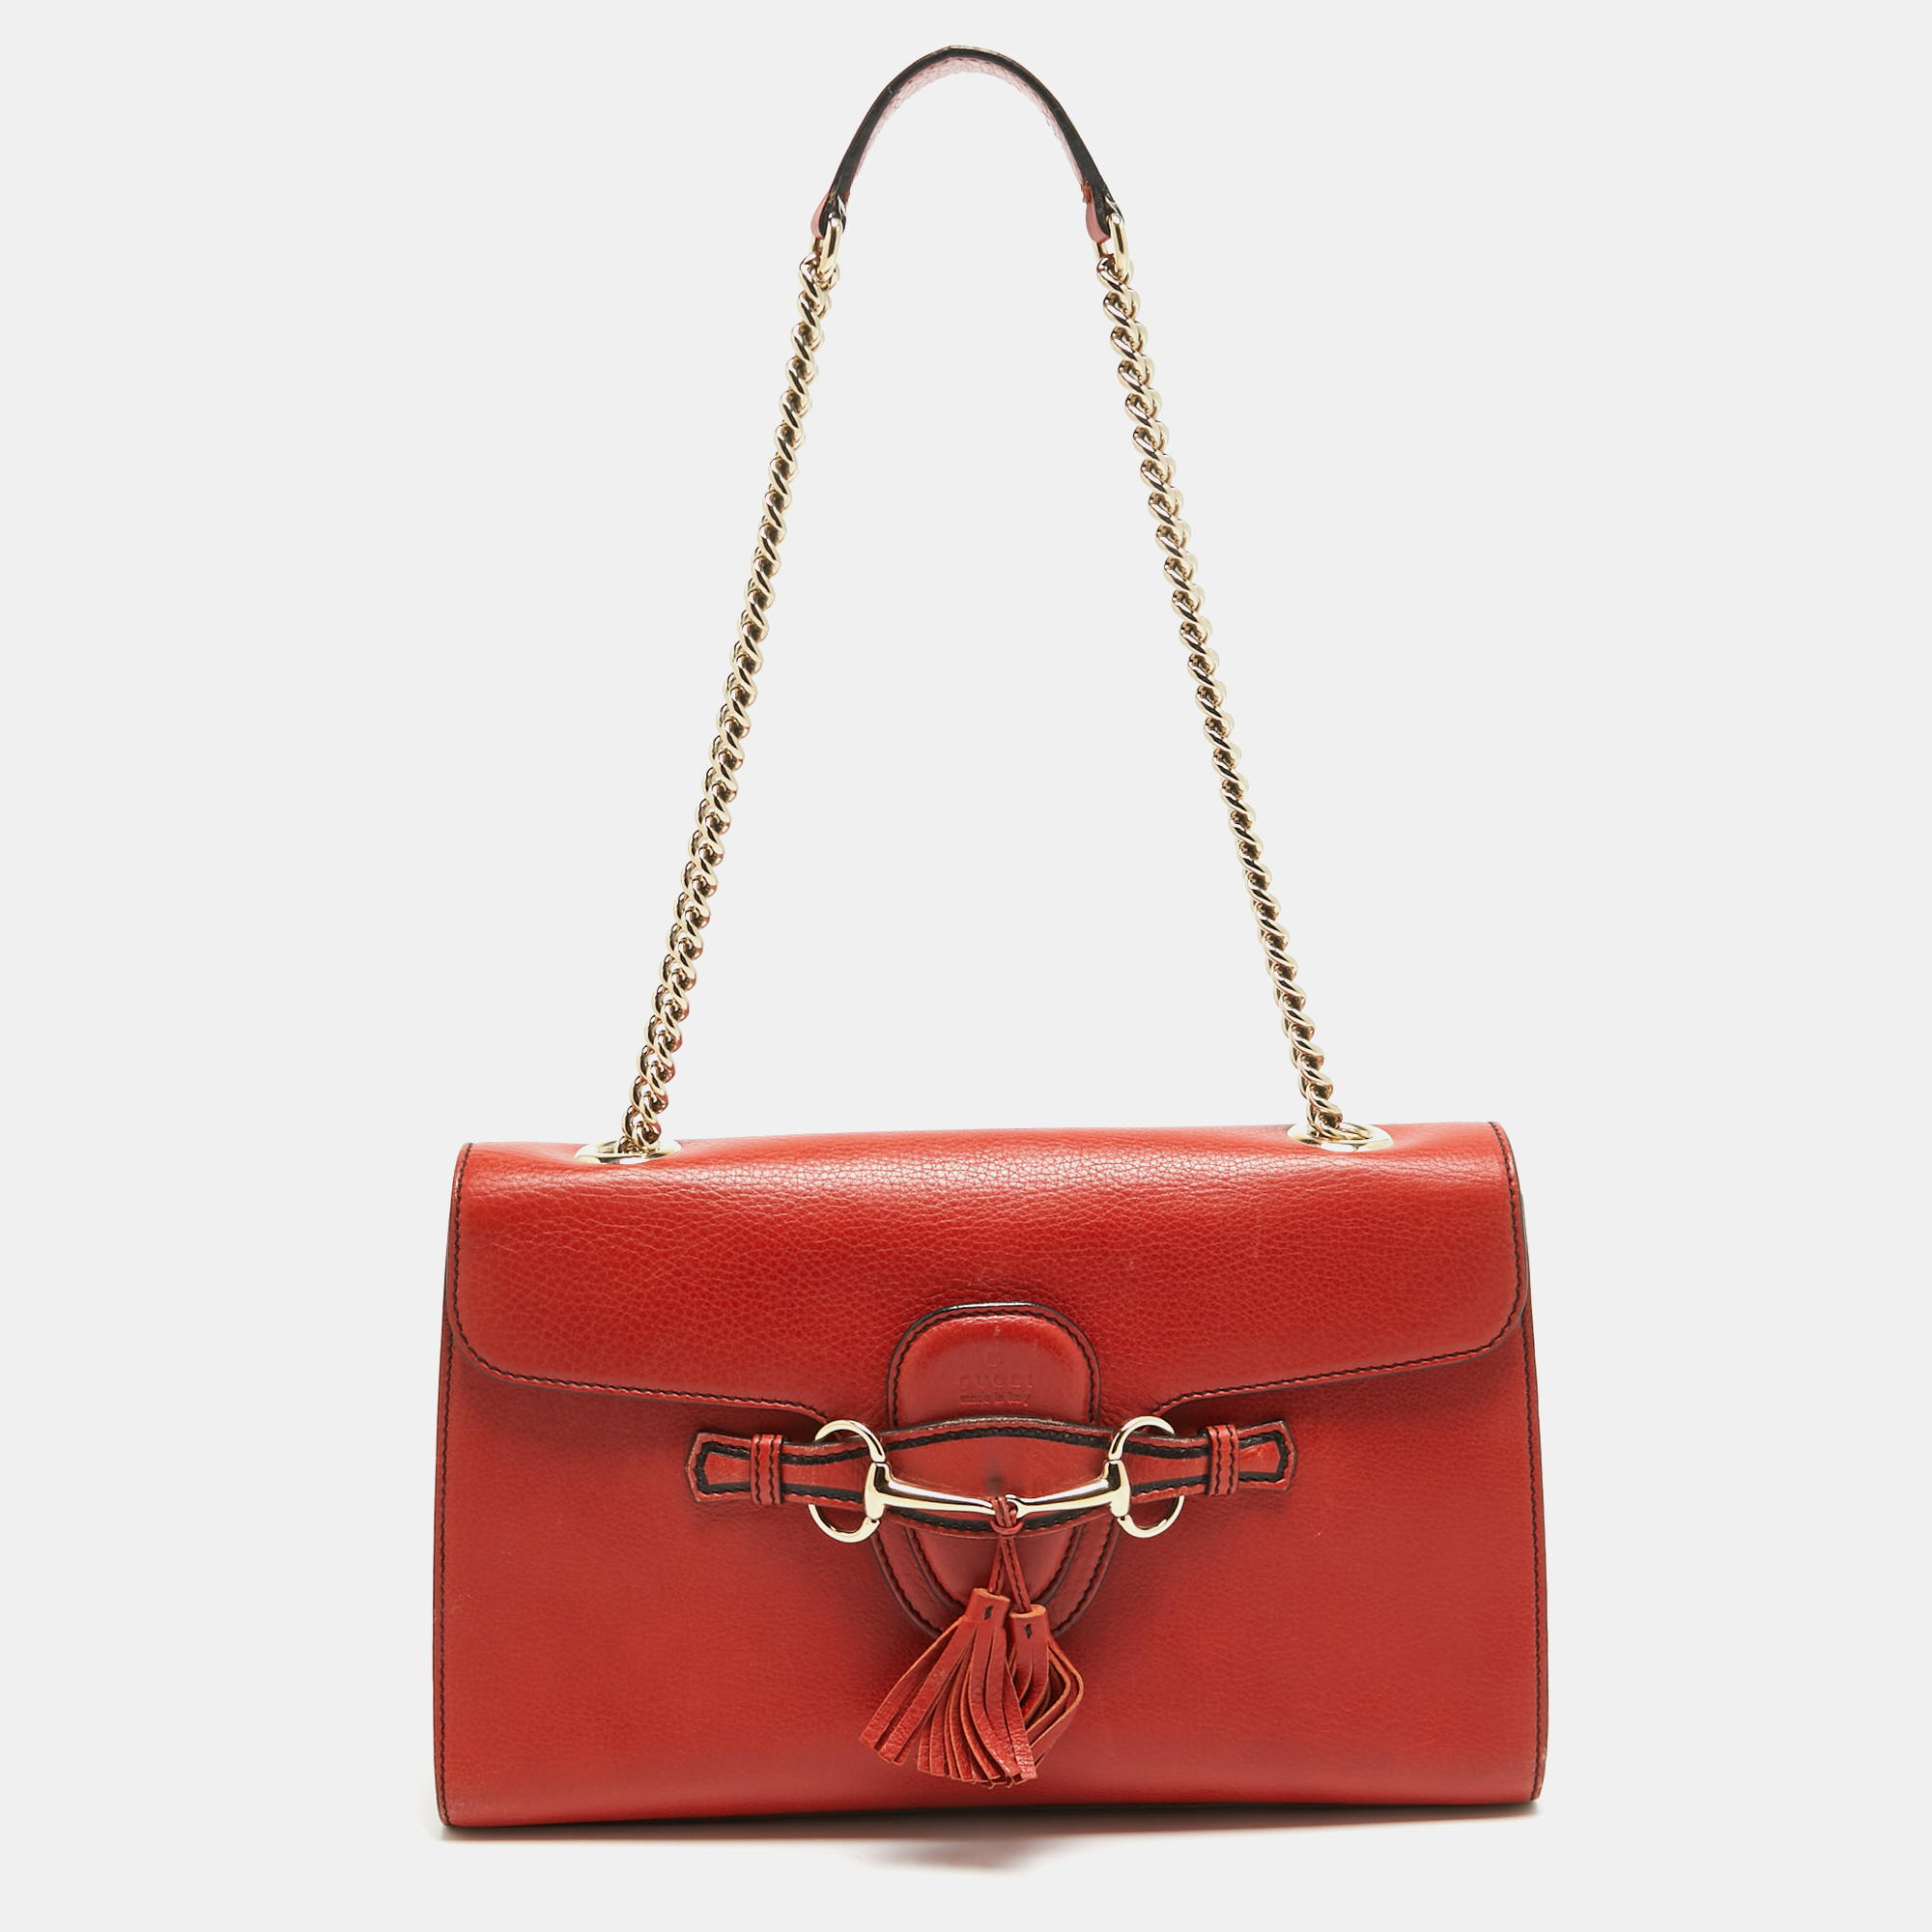 Gucci coral red leather medium emily shoulder bag